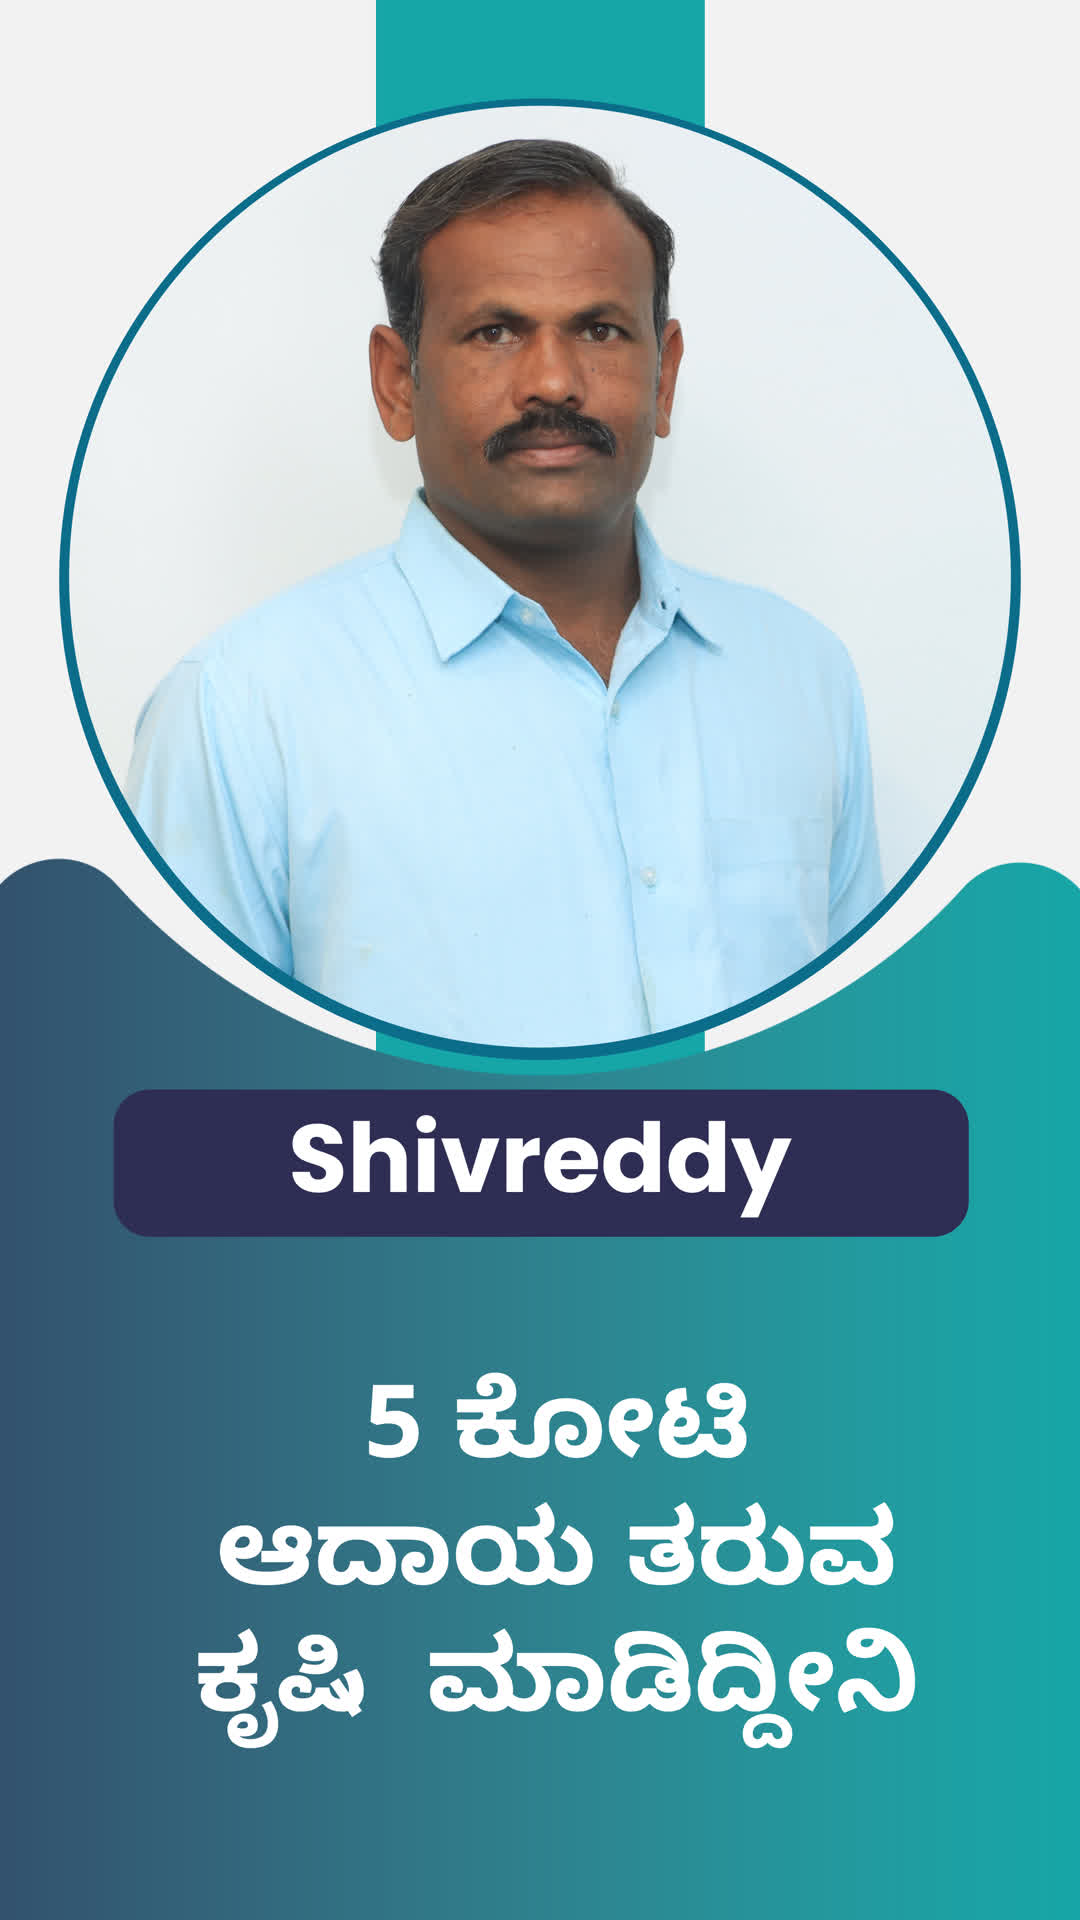 Shivreddy's Honest Review of ffreedom app - Gadag ,Karnataka